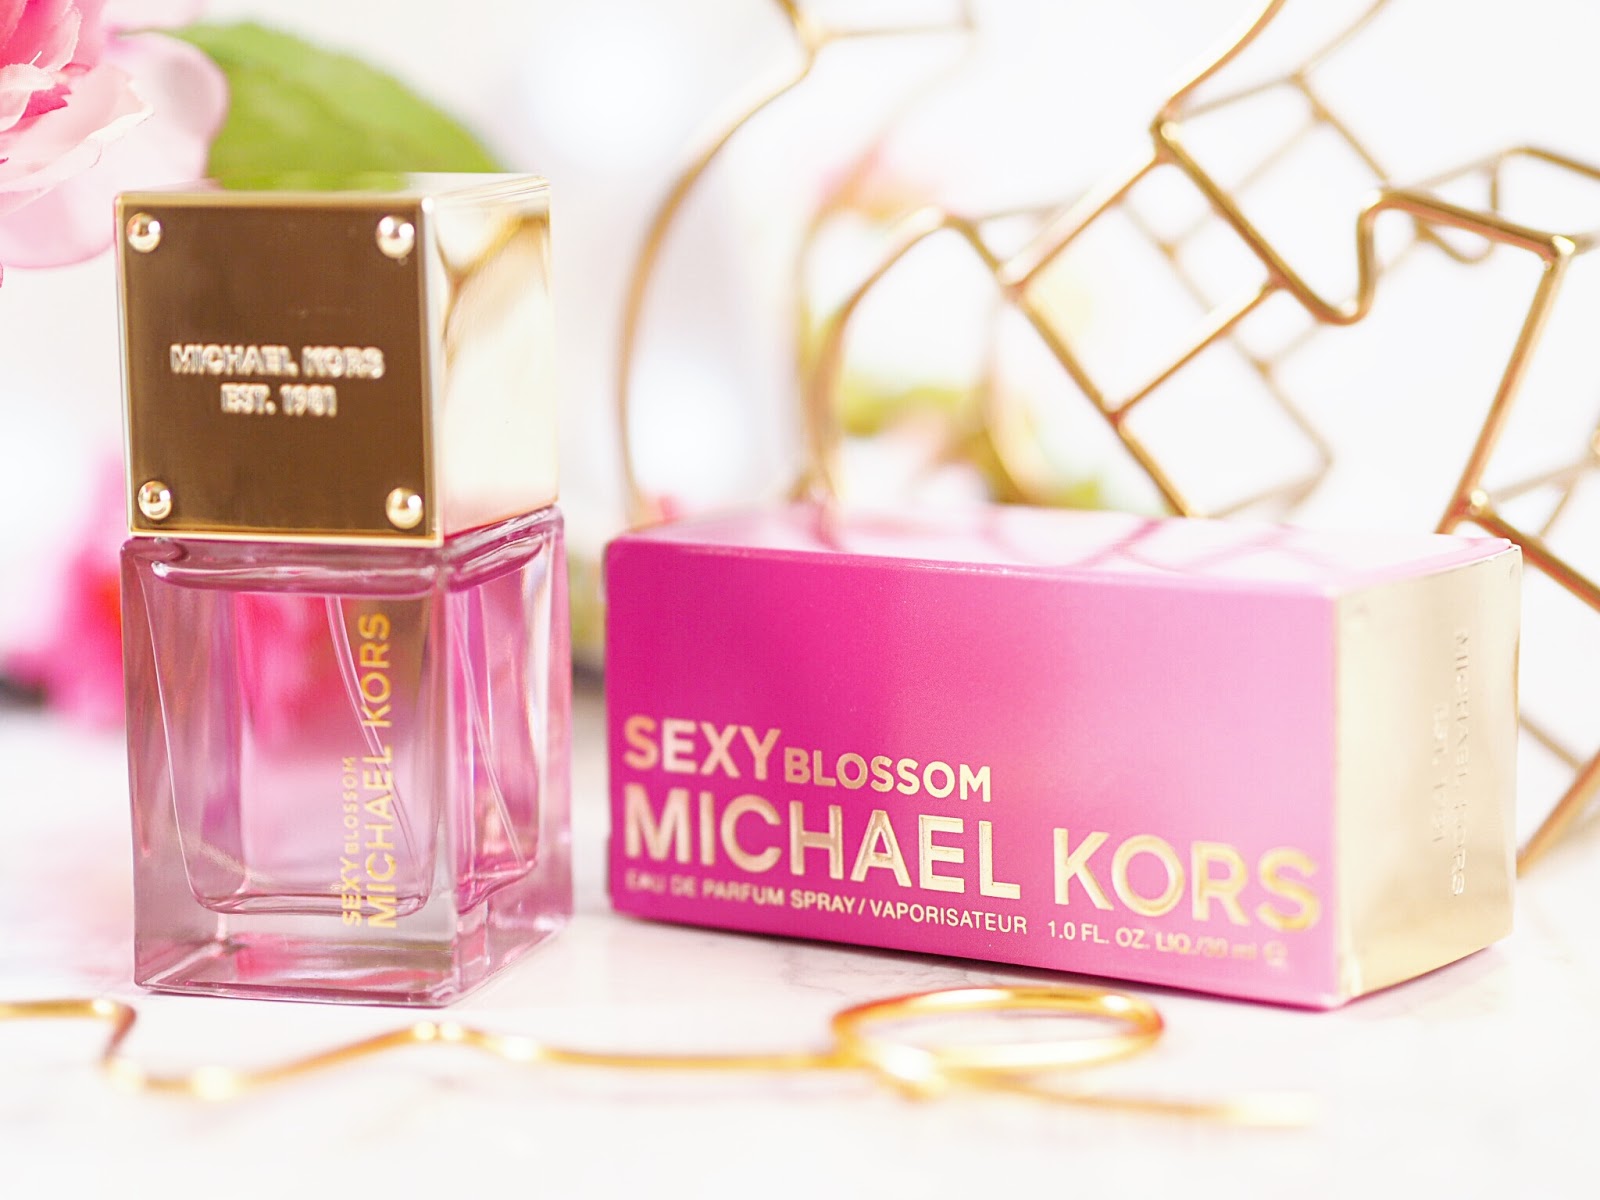 Michael Kors Sexy Blossom Review